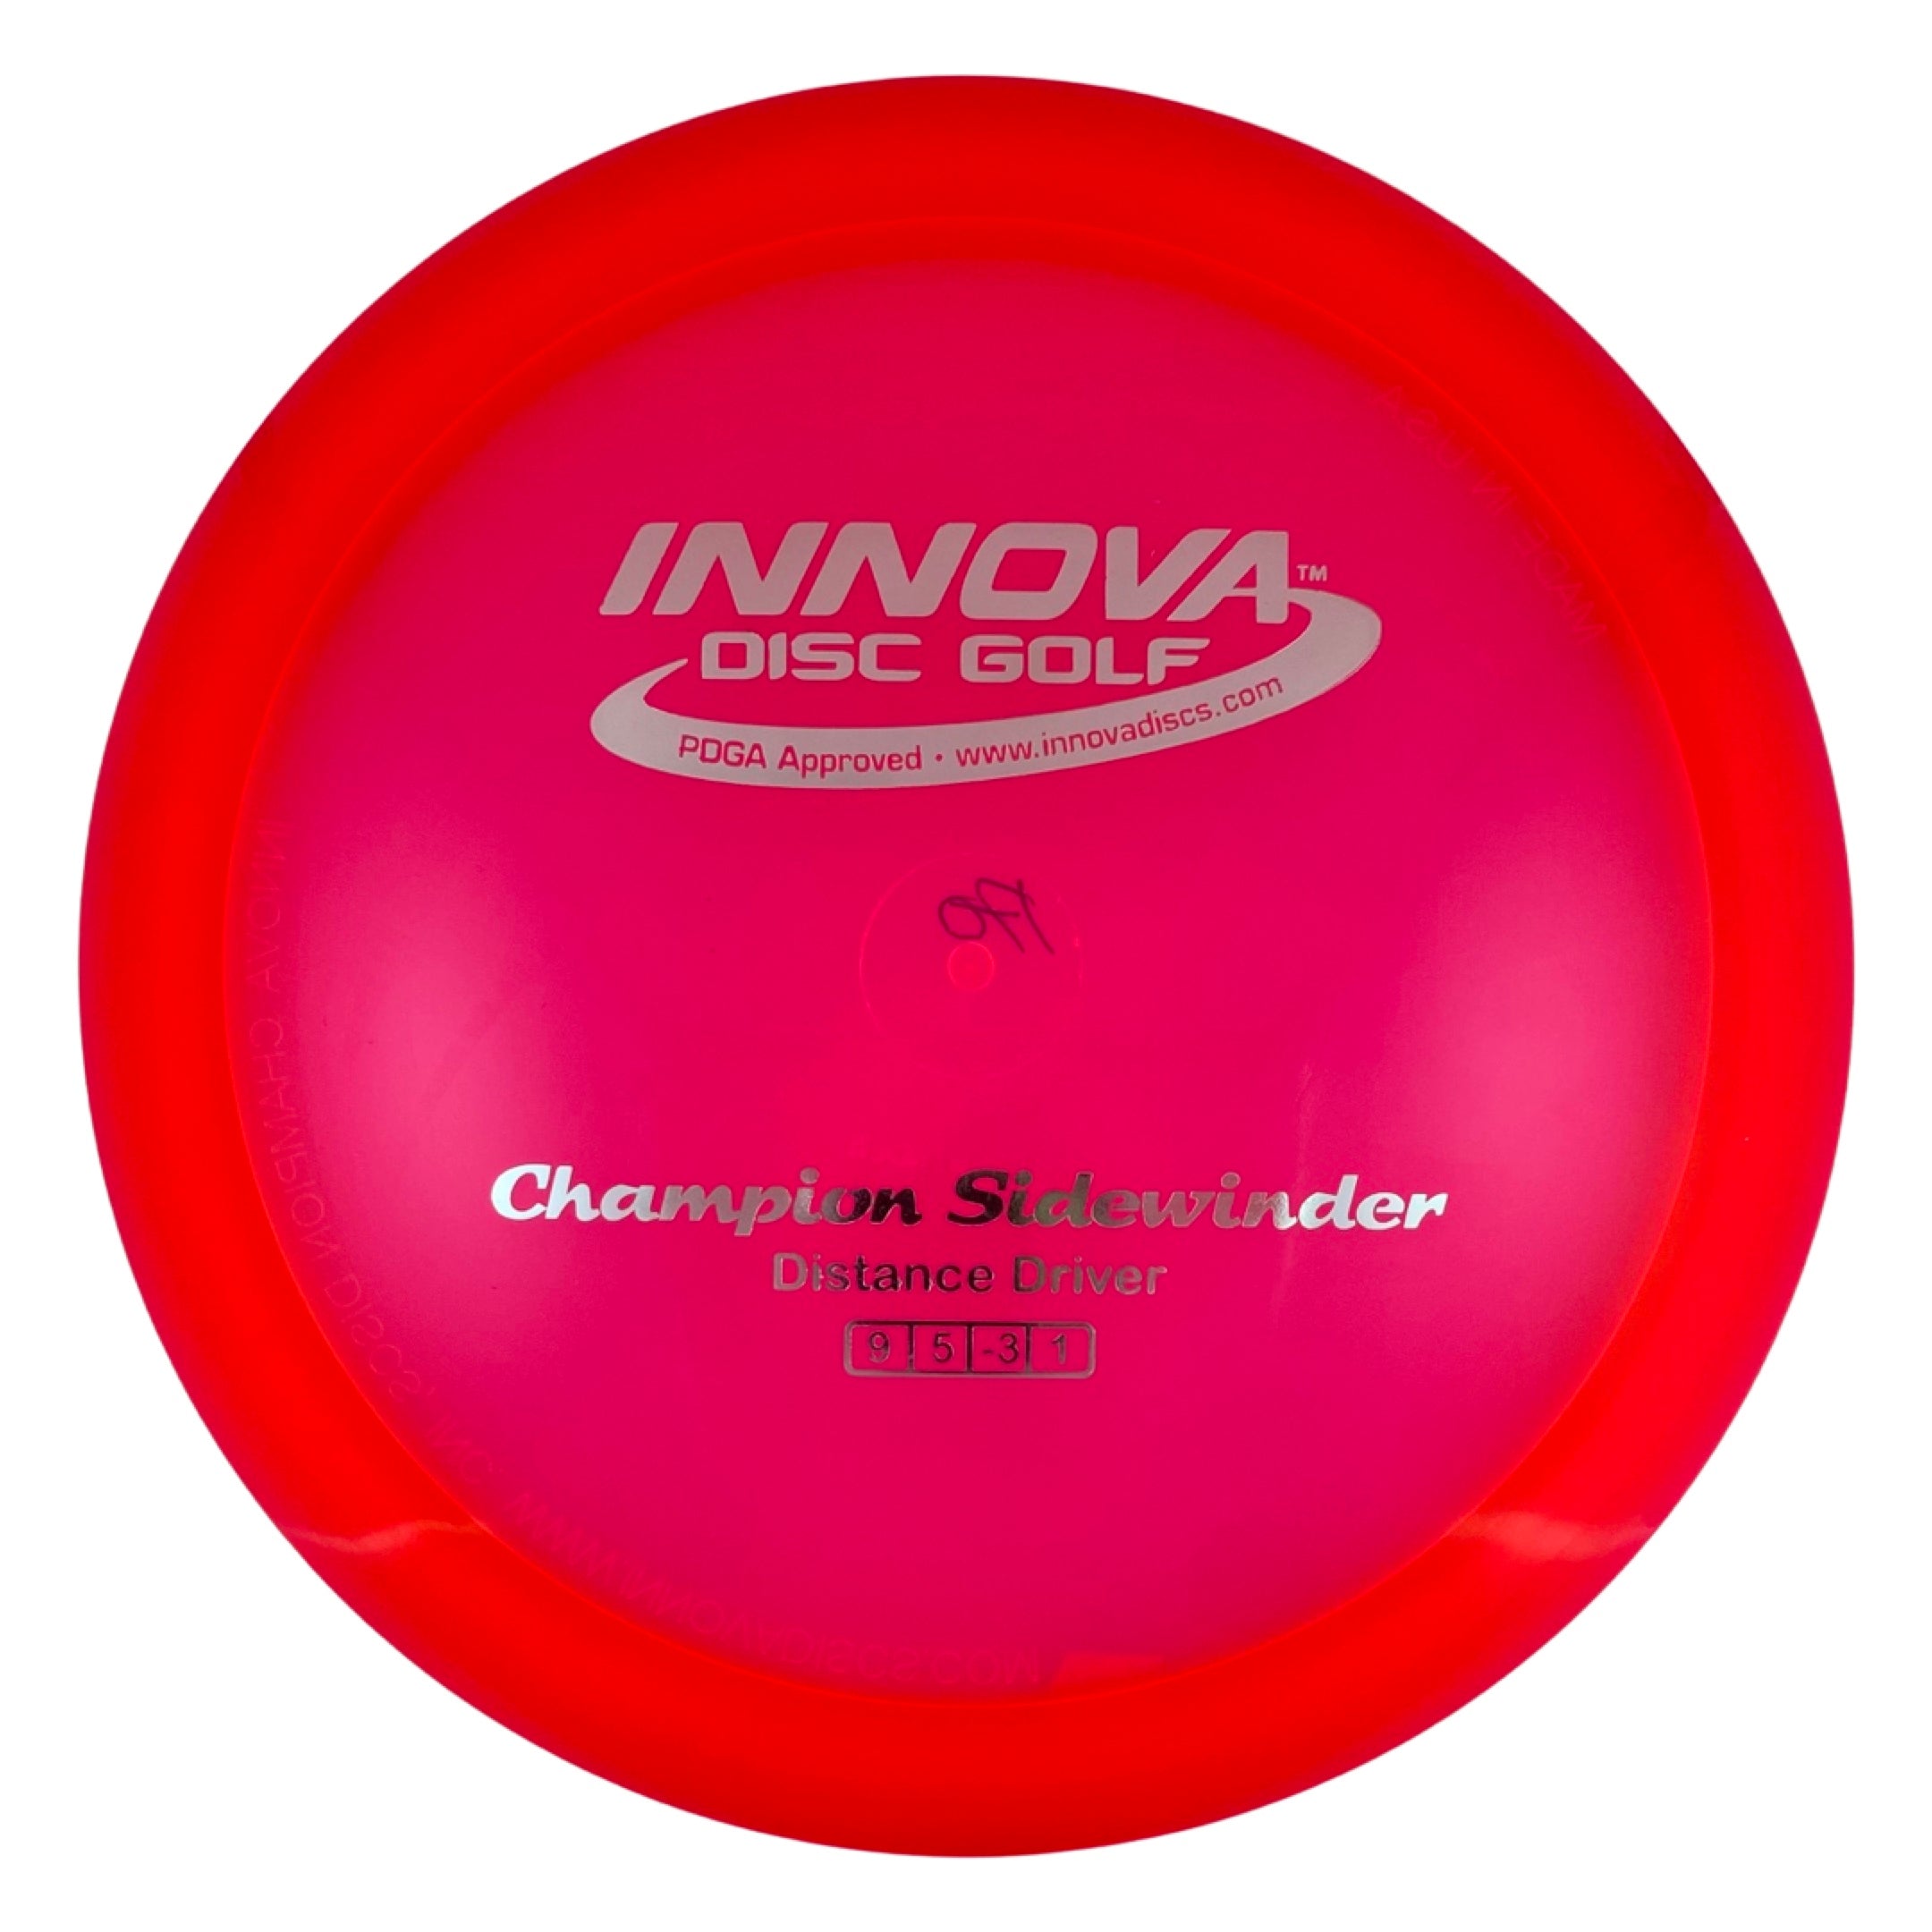 Innova Sidewinder - Champion